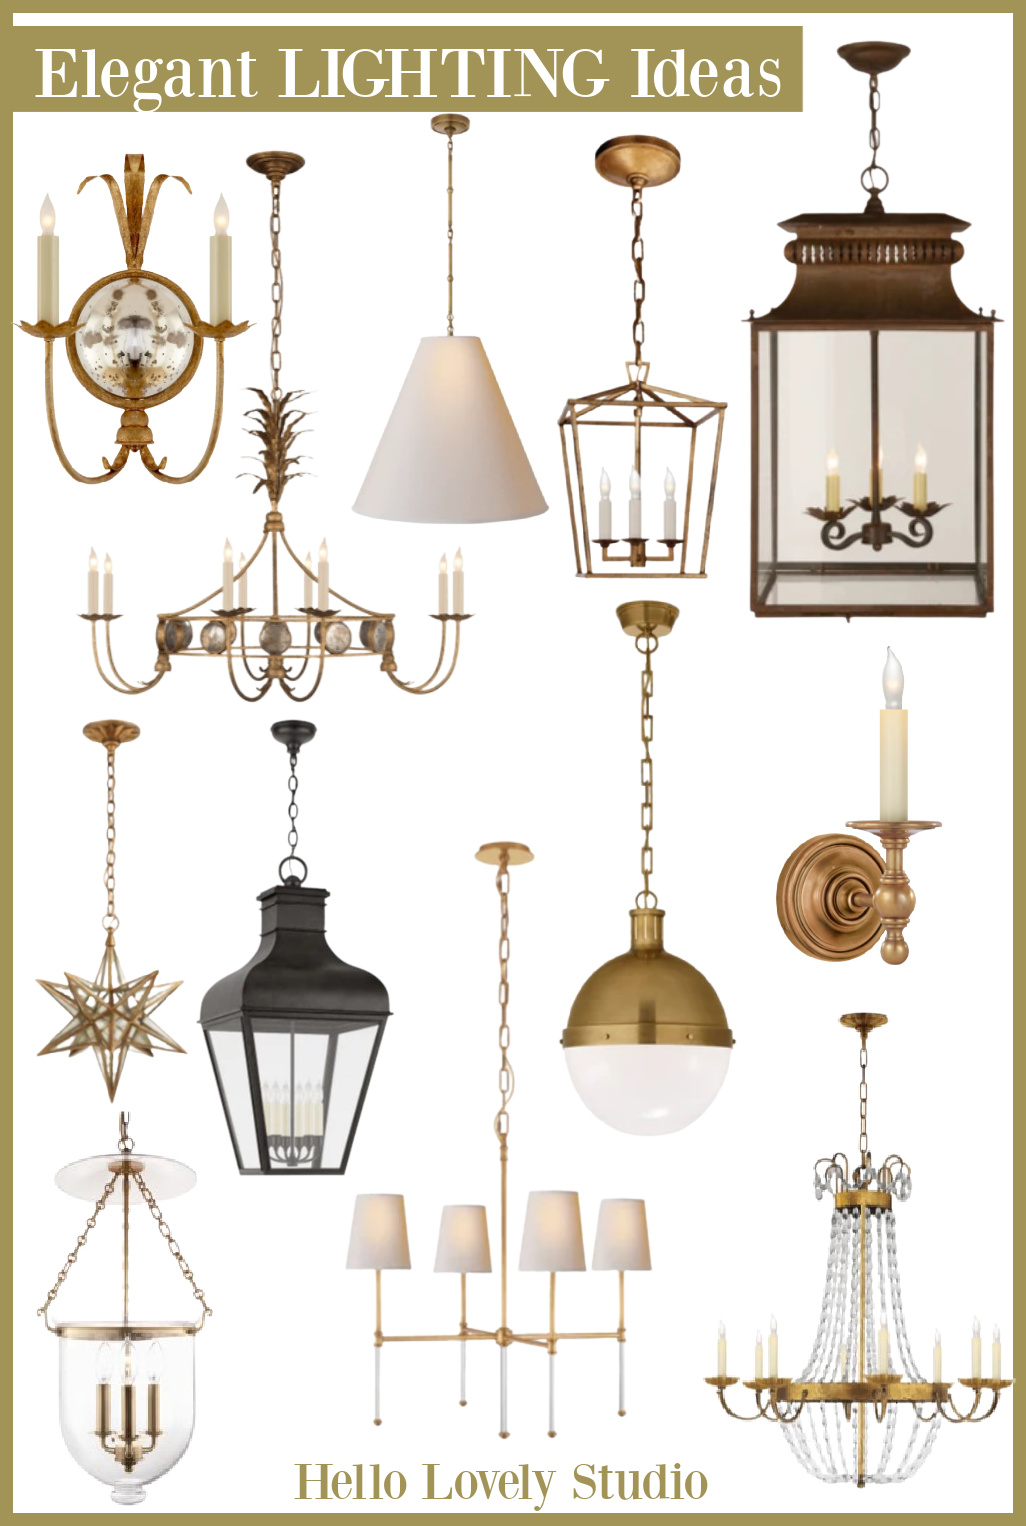 Elegant Lighting Ideas on Hello Lovely Studio. #chandeliers #sconces #pendantlights